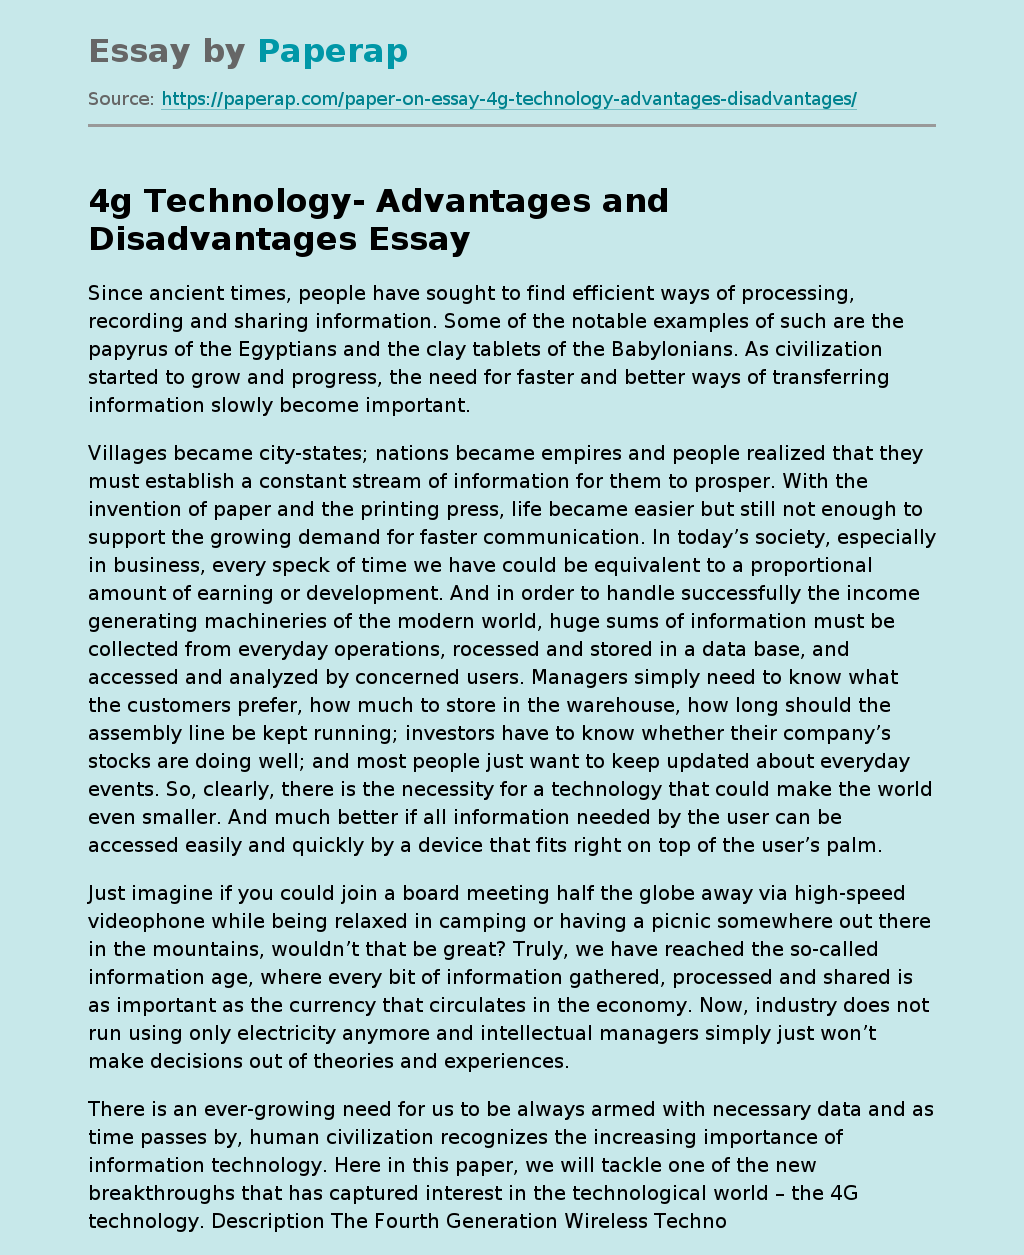 4g Technology- Advantages and Disadvantages